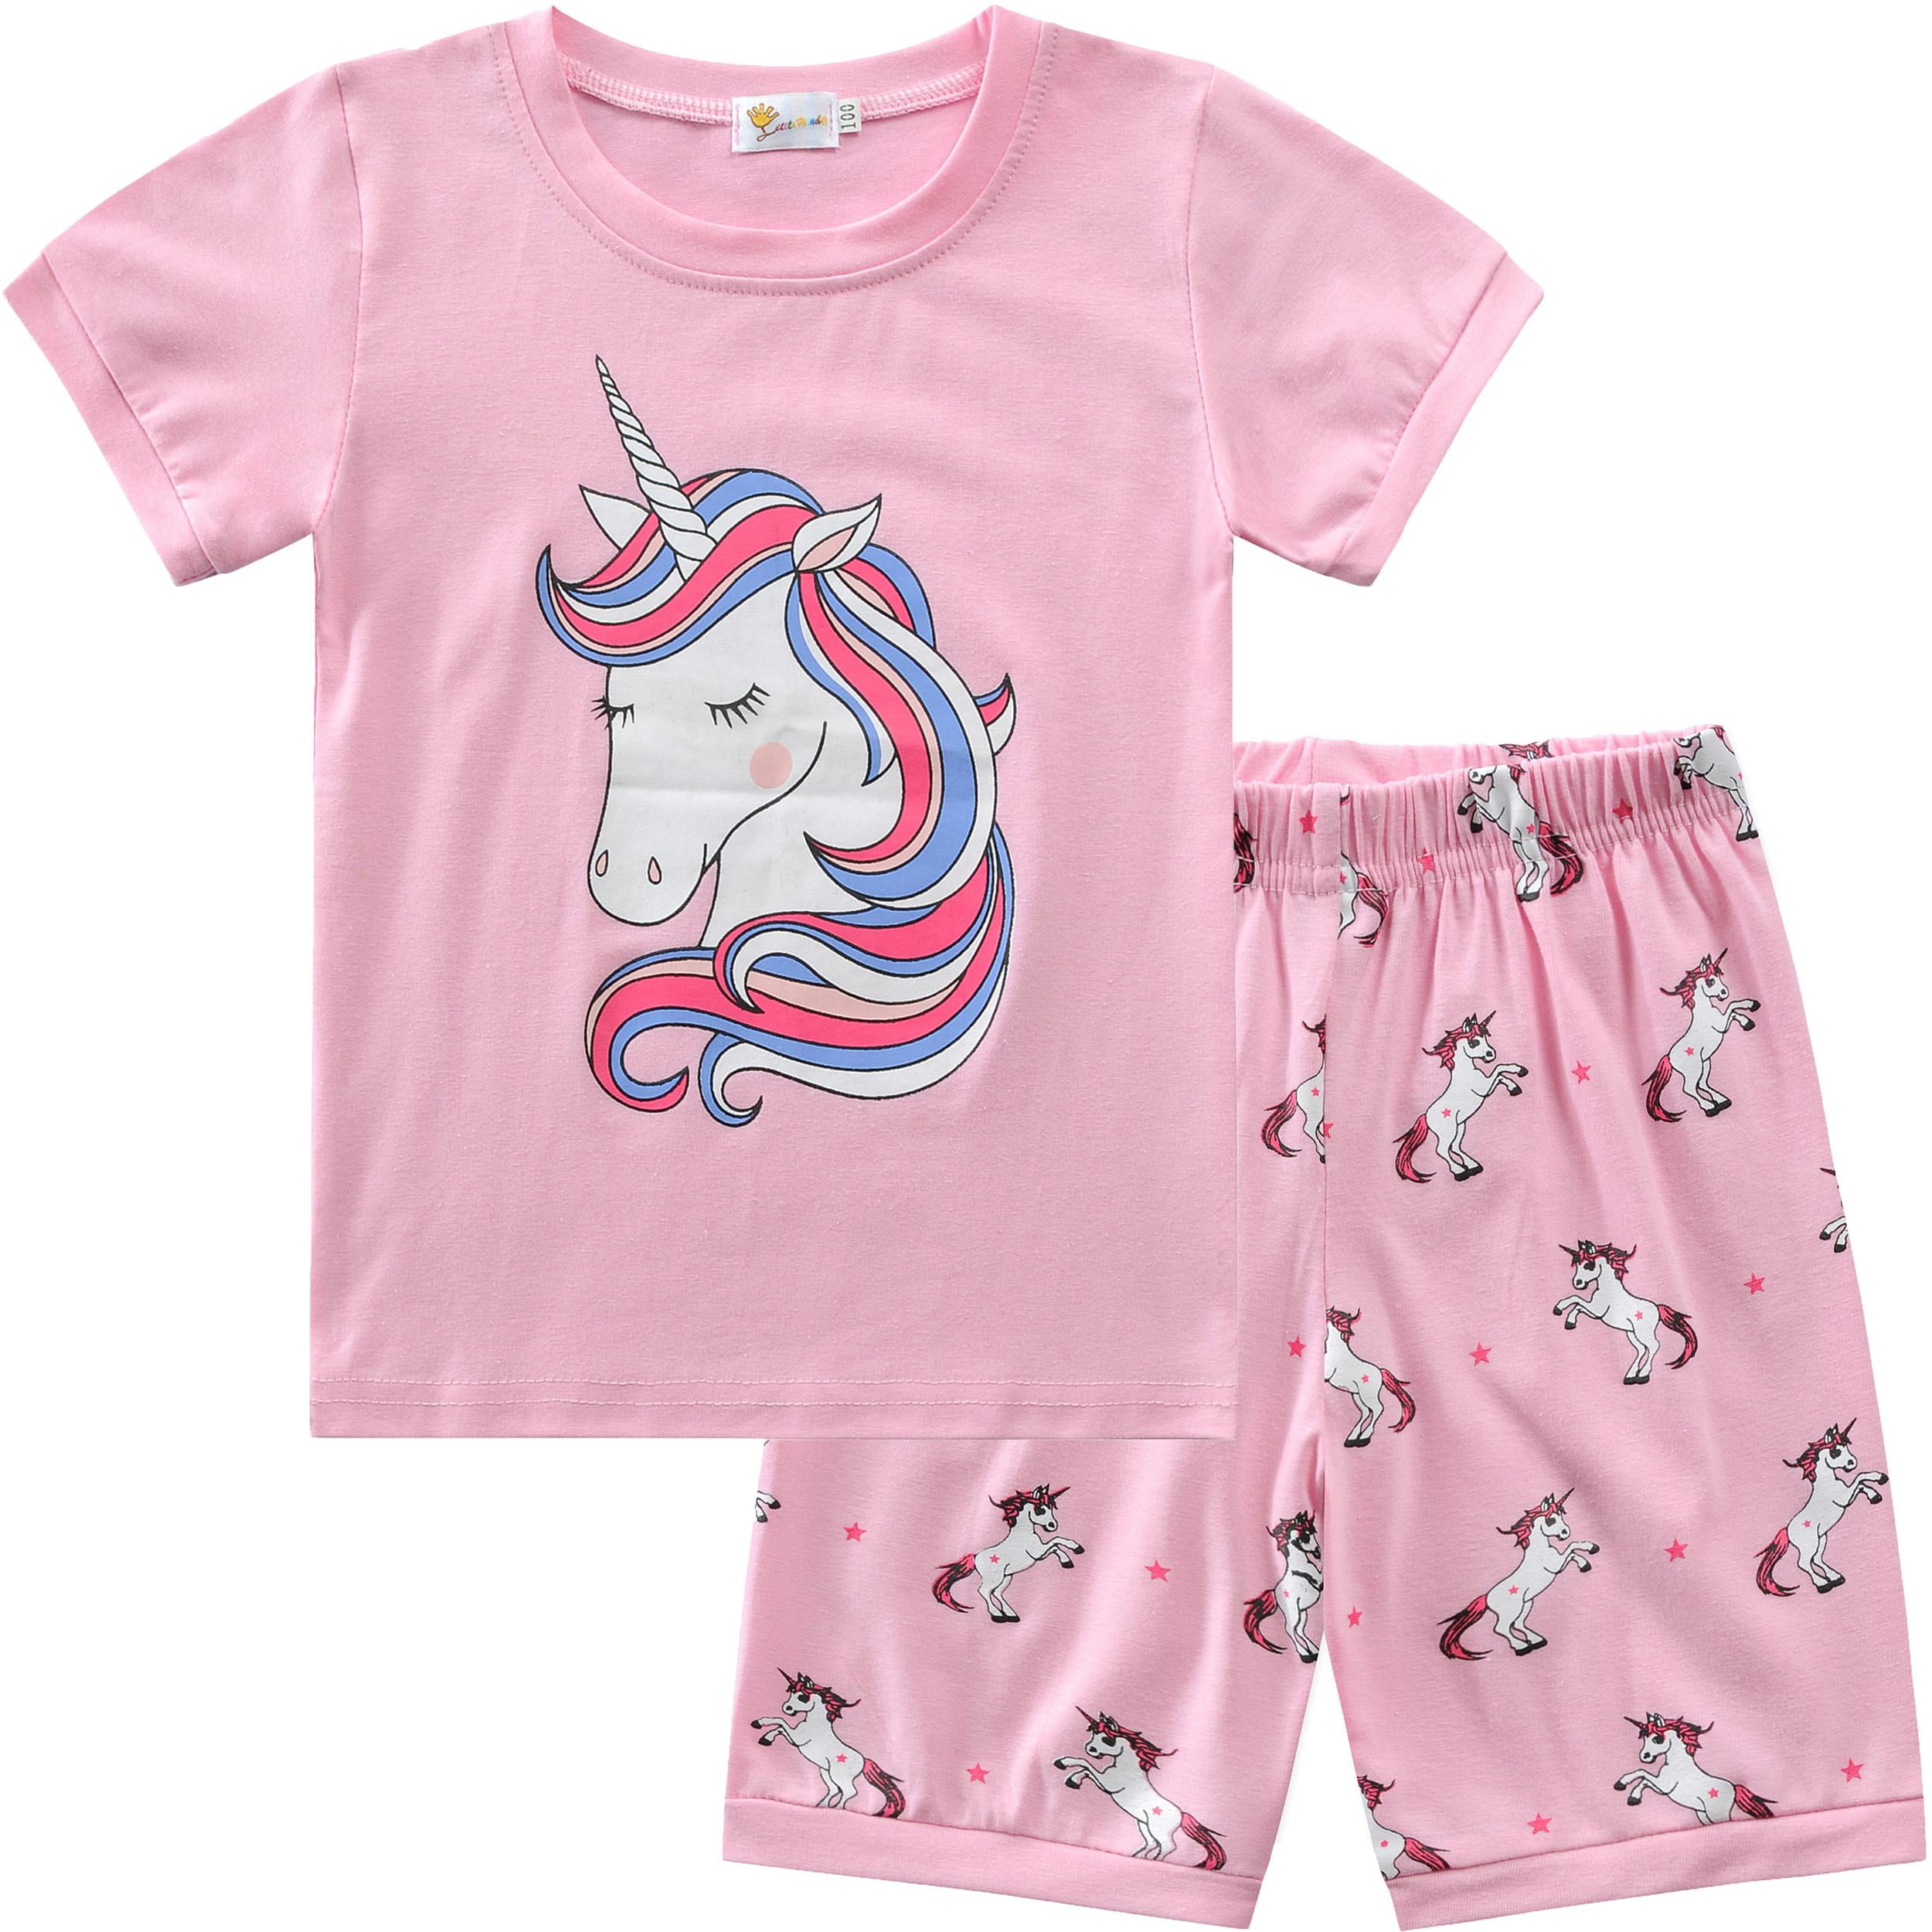 Unicorn Girls Kids Long Sleeve Pyjamas sets Outfit Sleepwear Homewear Age 2-7Y